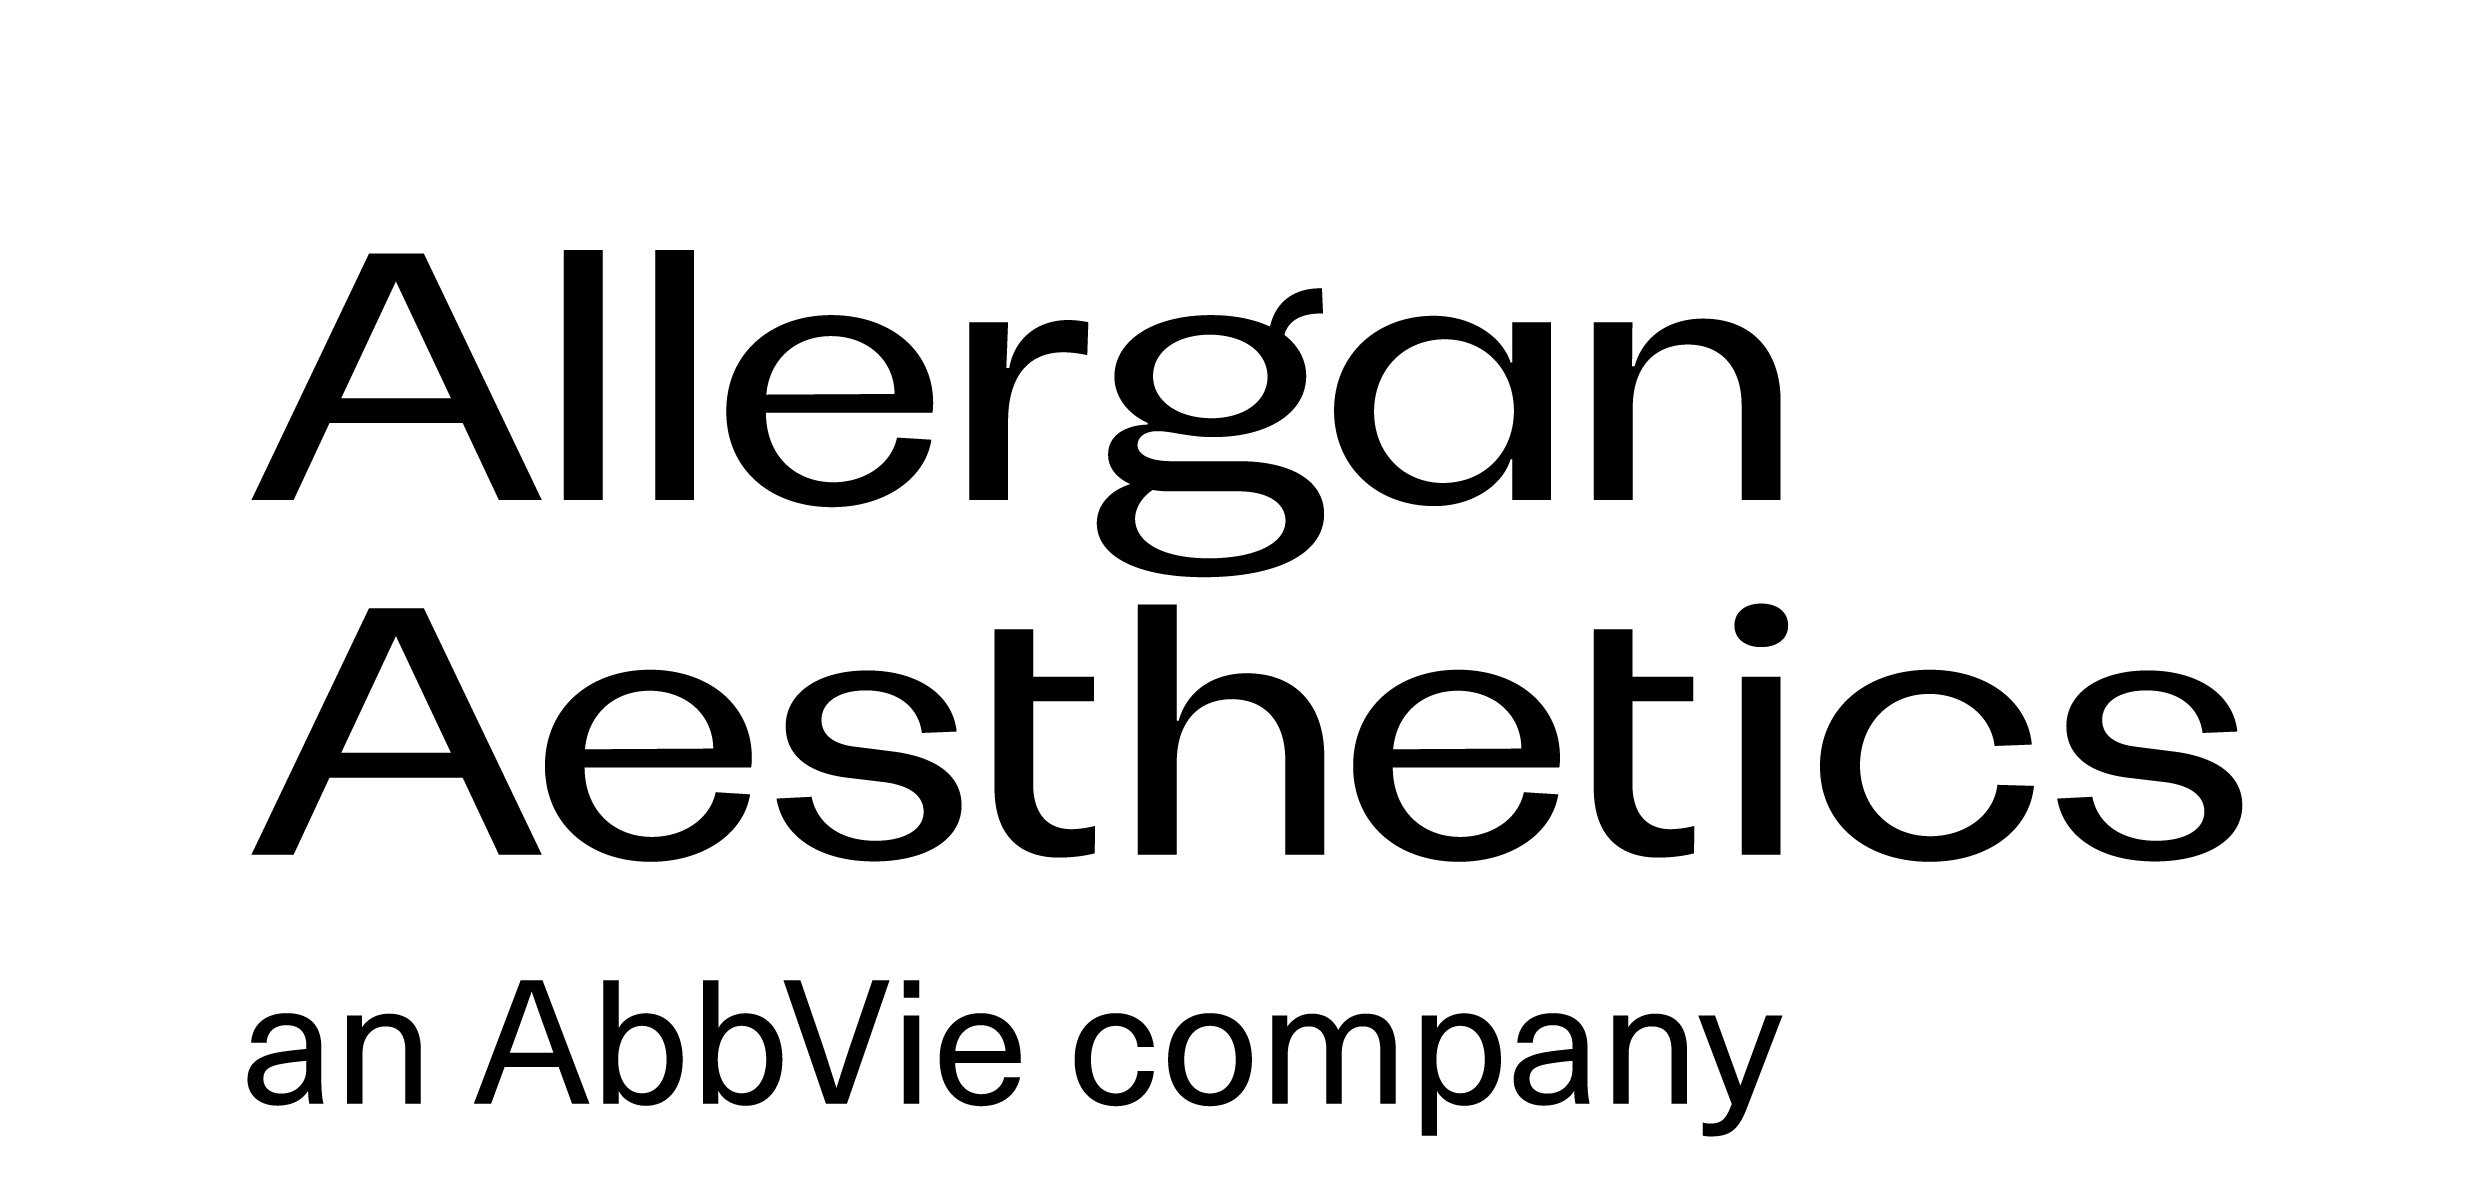 allerganaesthetics logo